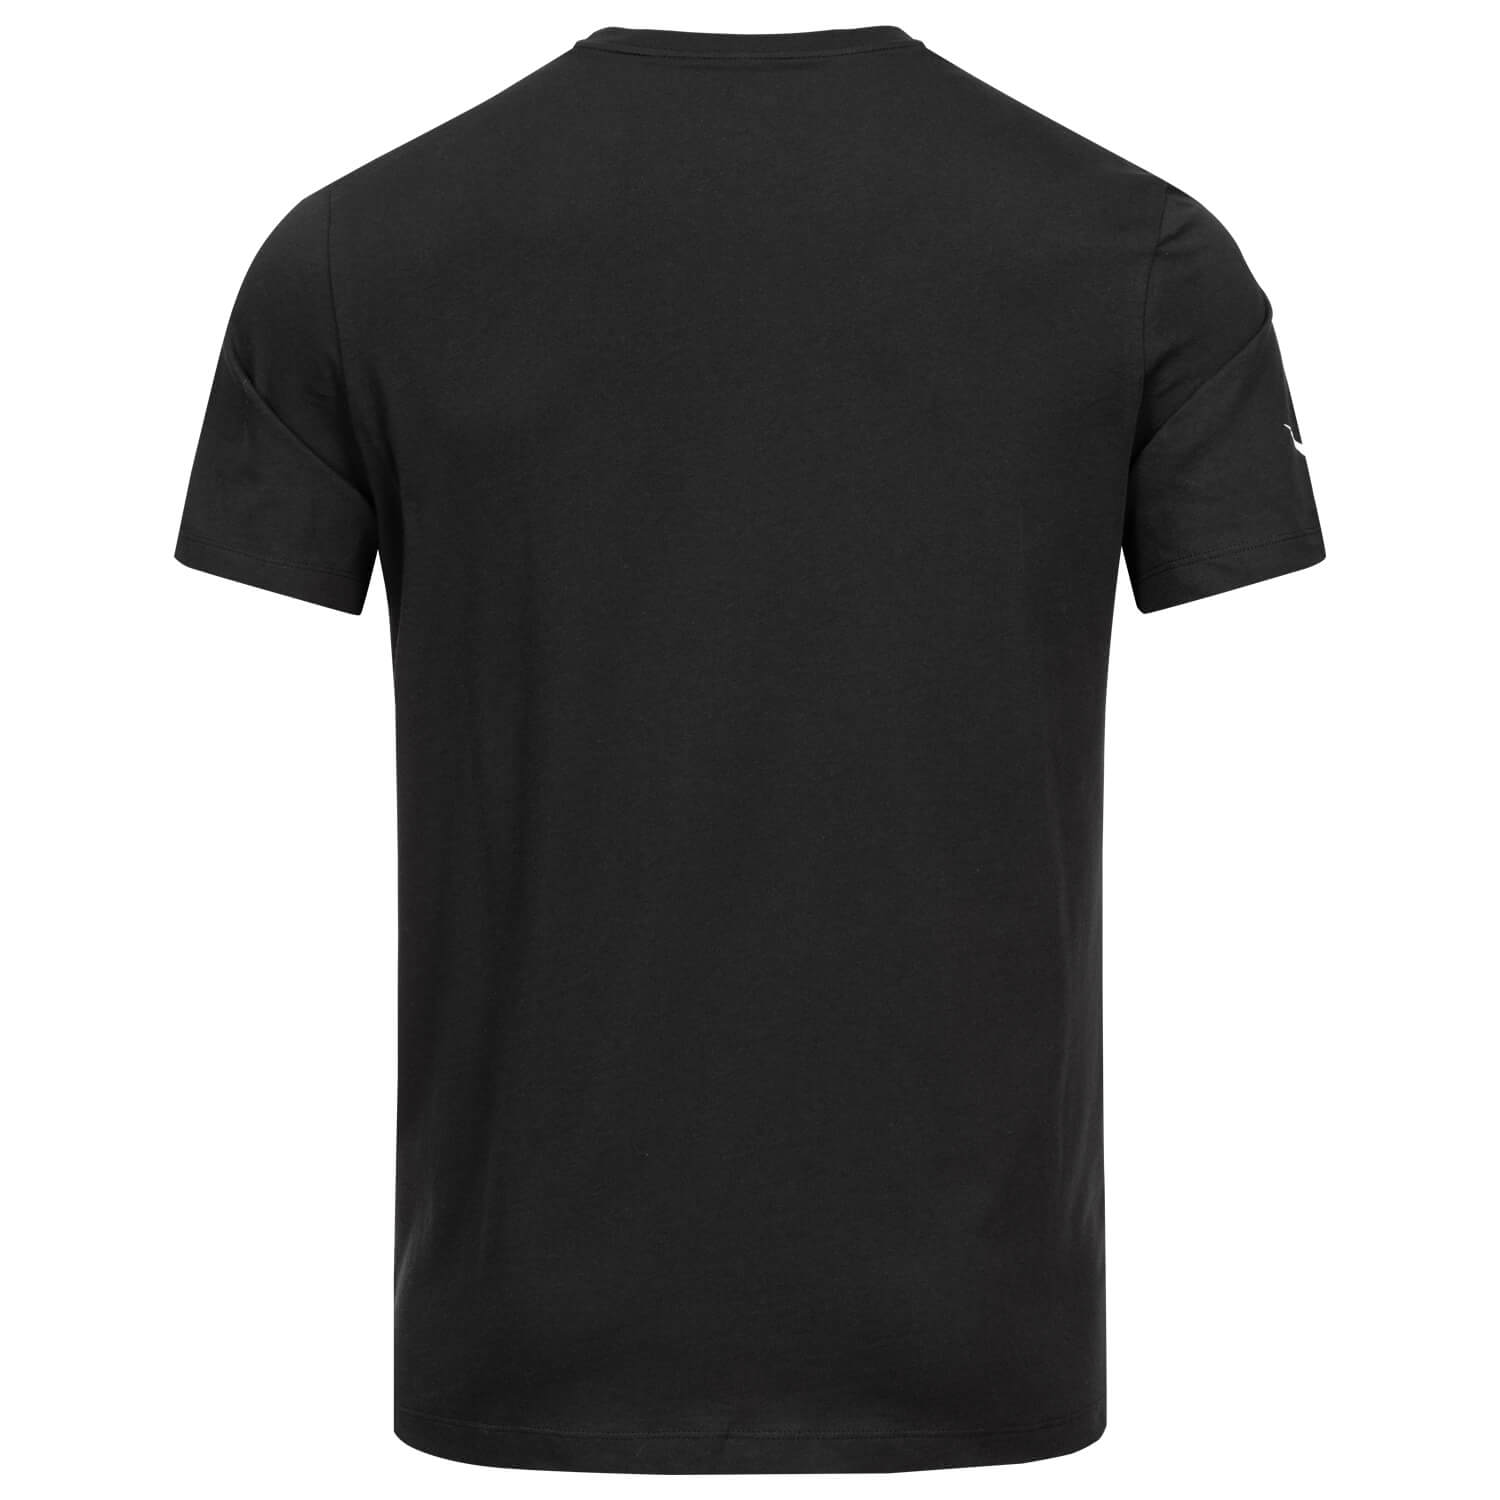 Bild 2: Nike T-Shirt Basic schwarz